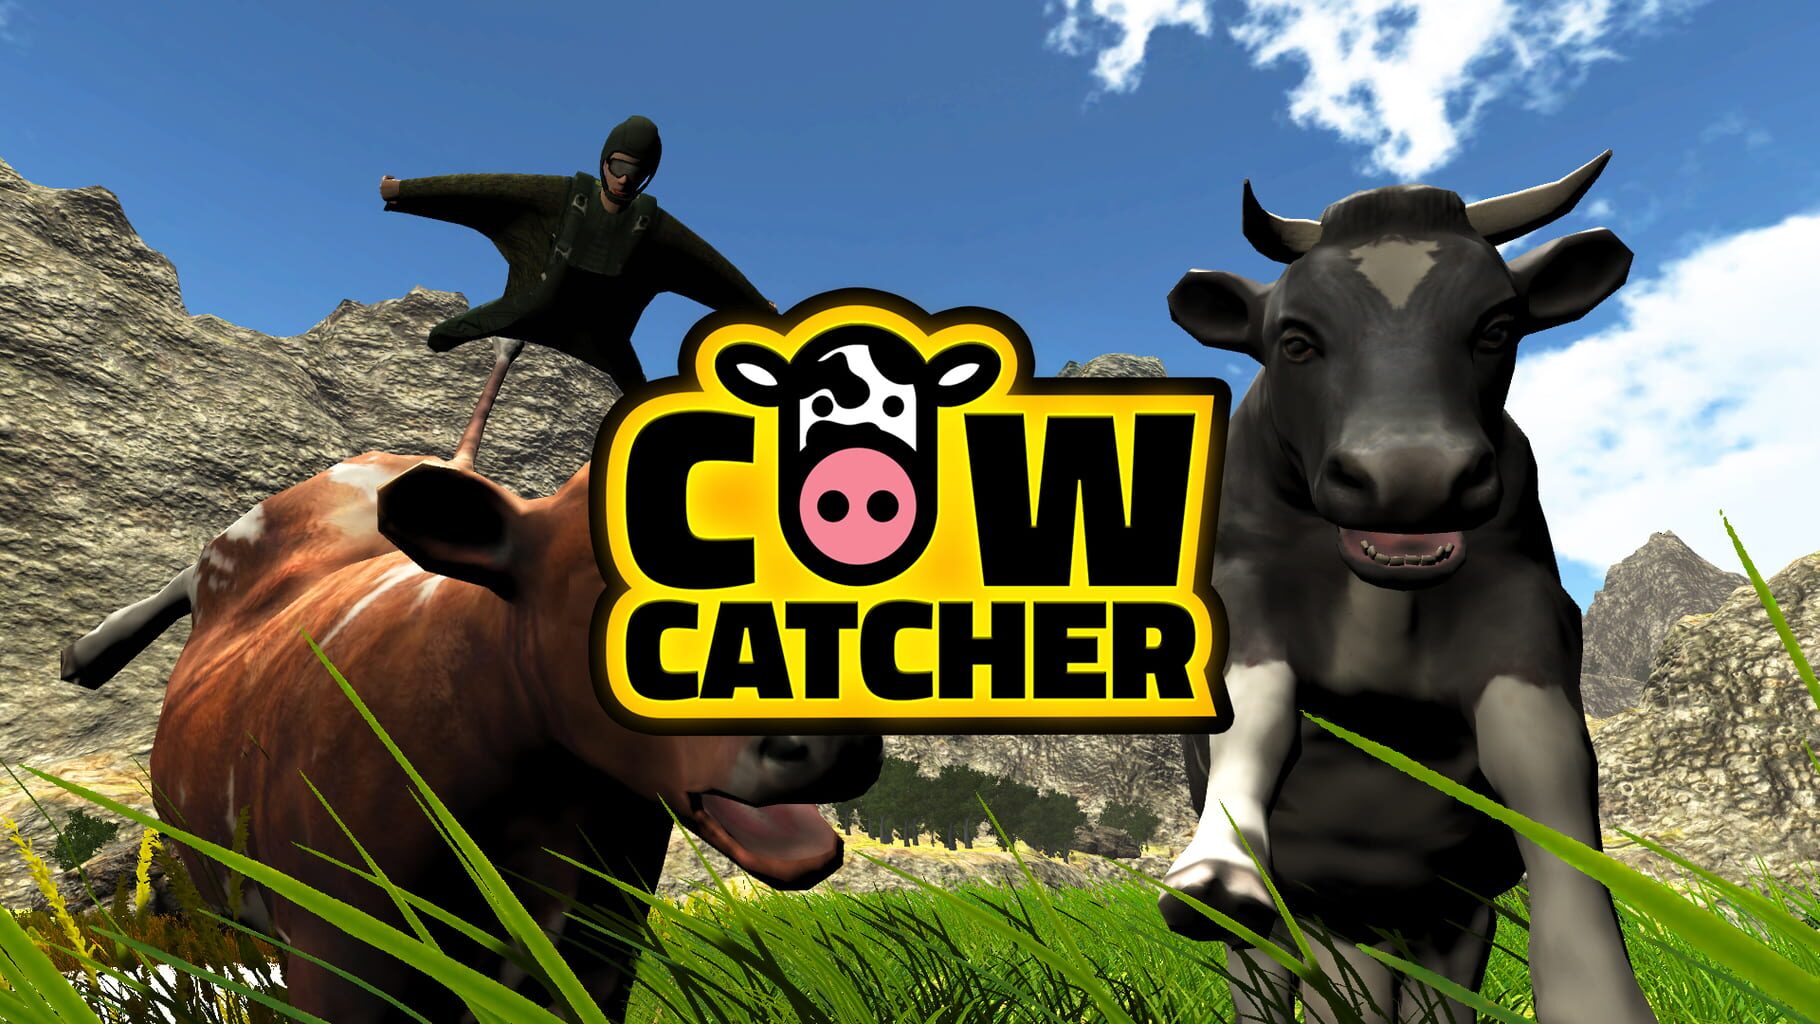 Cow Catcher artwork